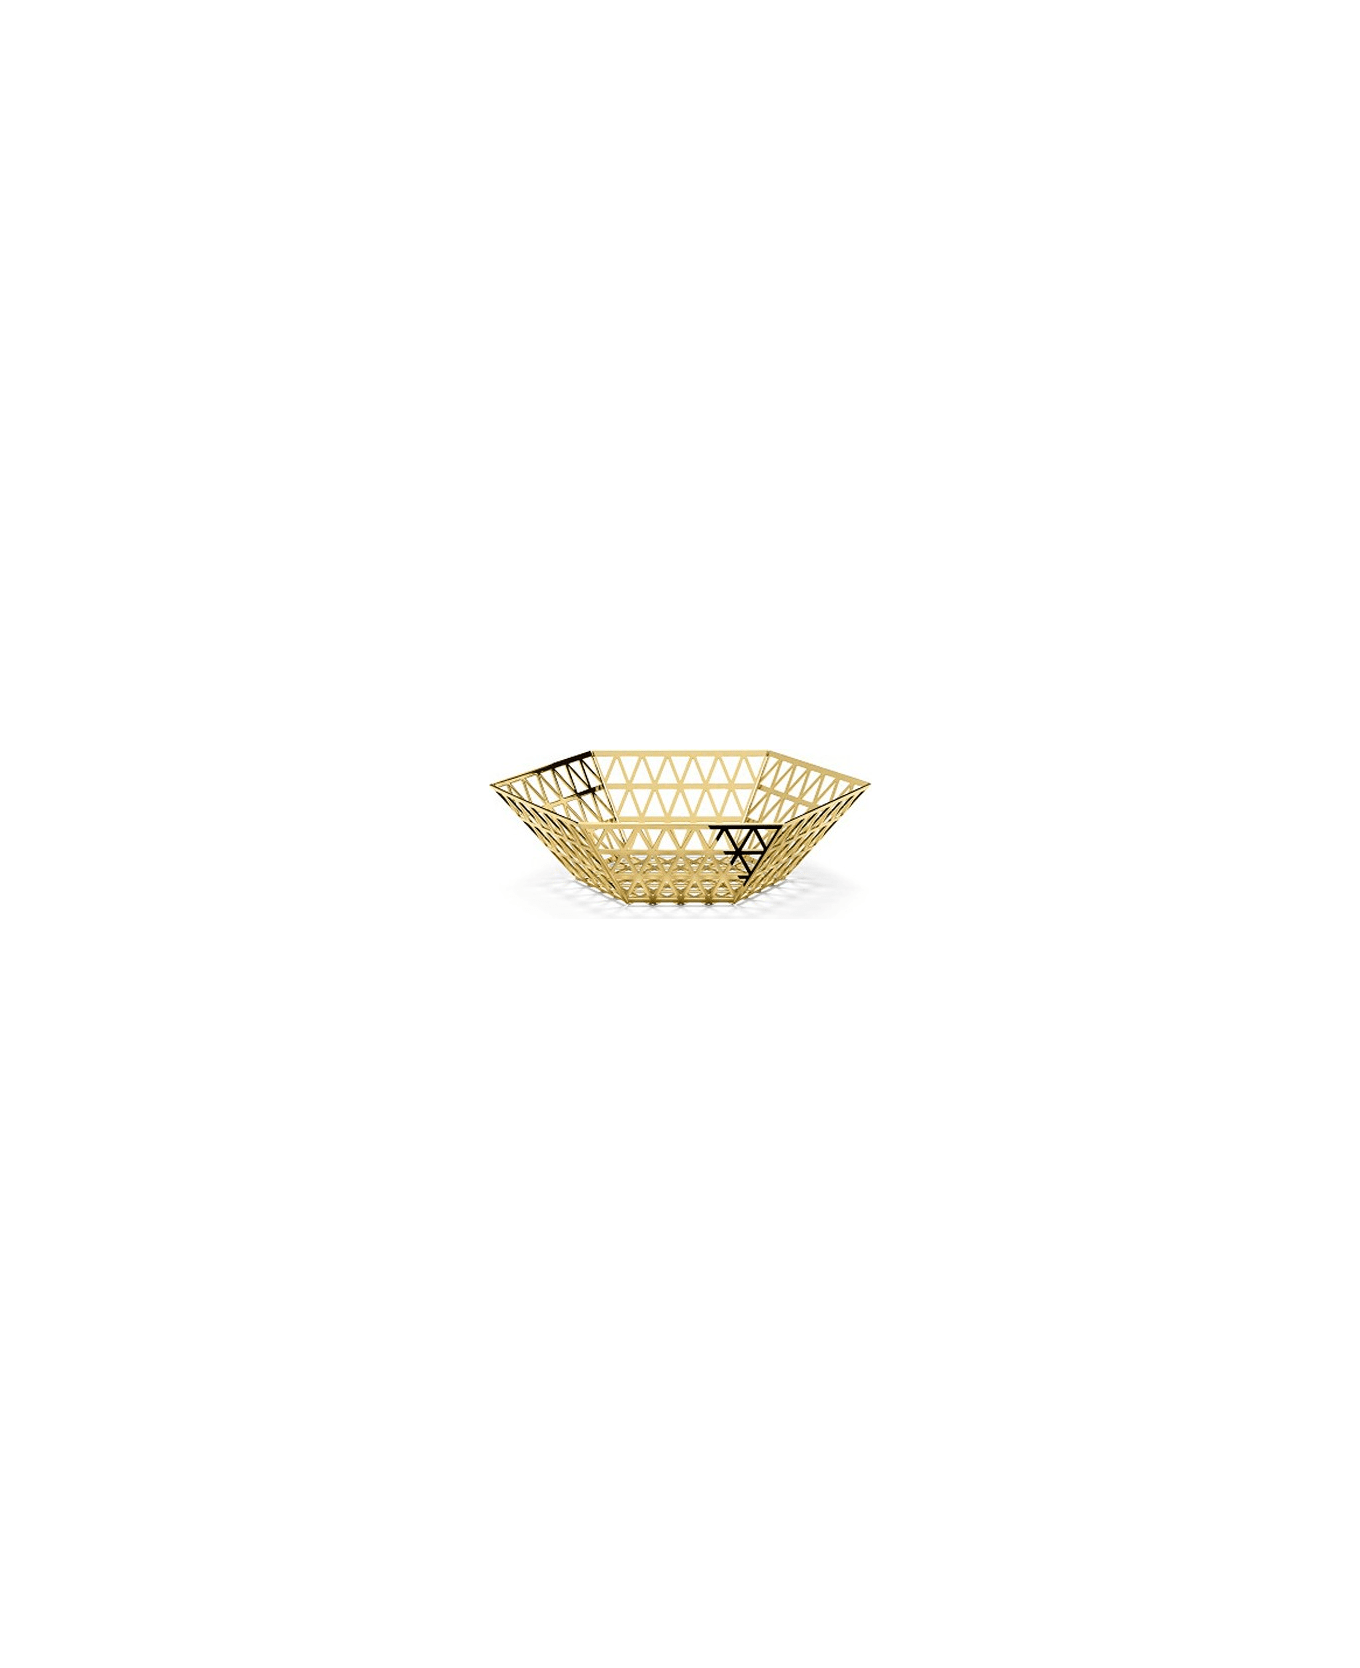 Ghidini 1961 Tip Top - Center Bowl Polished Gold - Polished gold